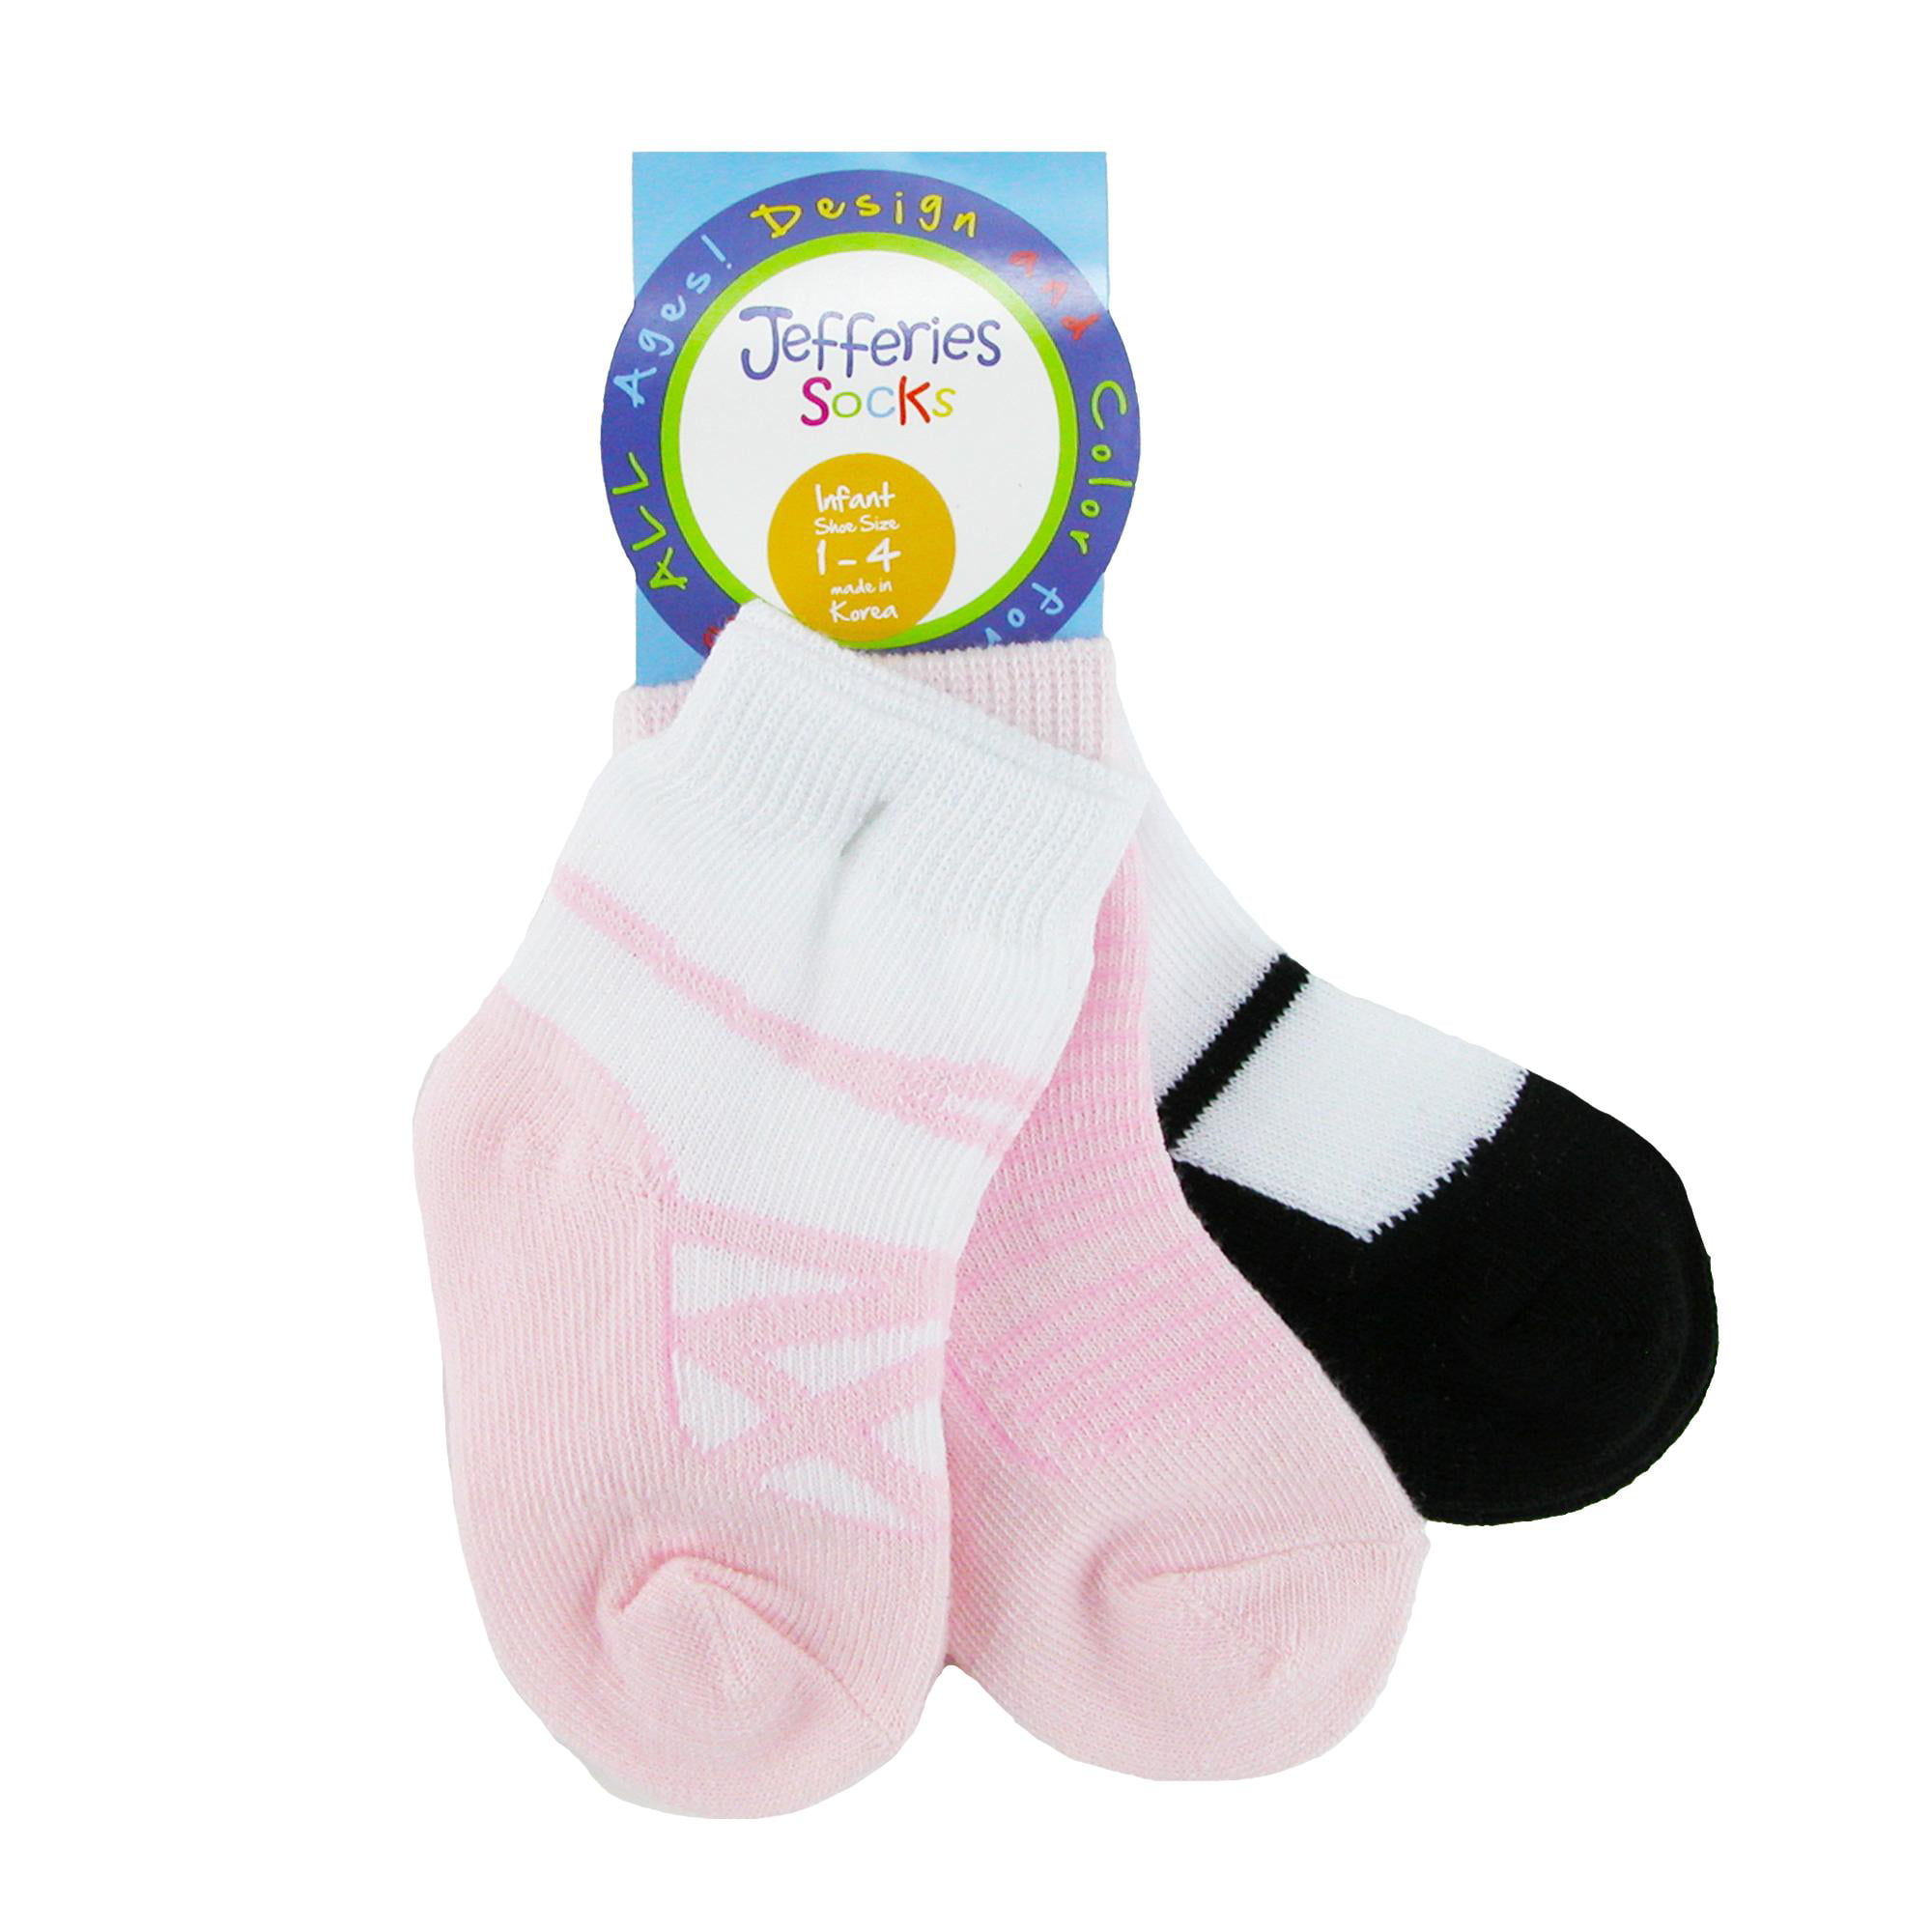 Jefferies Socks Newborn Infant Ballet Mary Janes Crew Socks (3 Pair ...